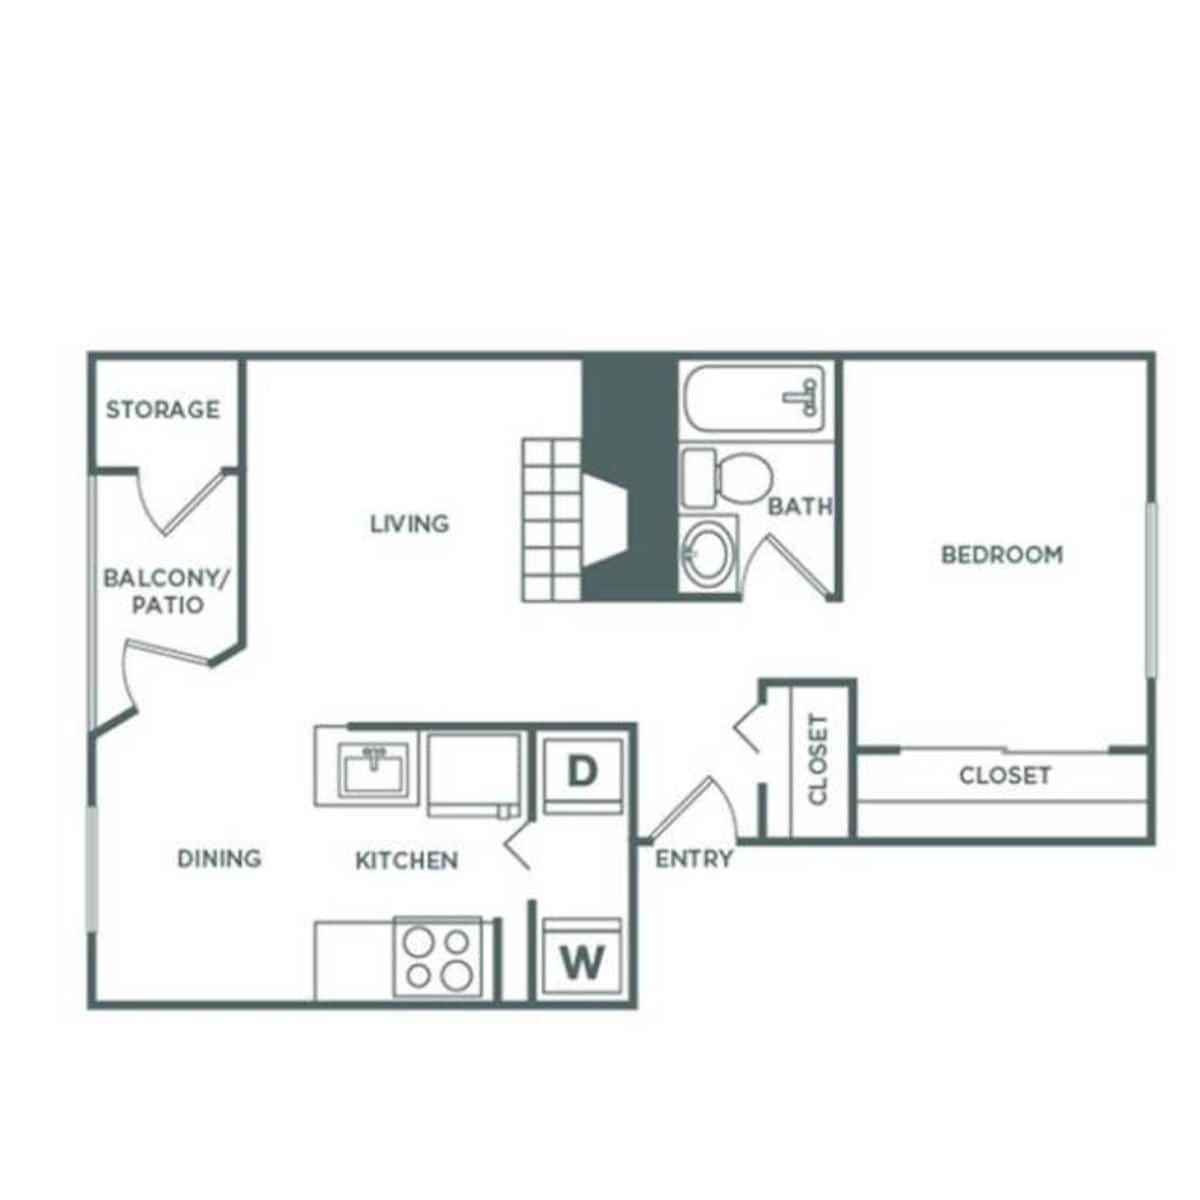 Floorplan diagram for 1 Bed, 1 Bath, showing 1 bedroom